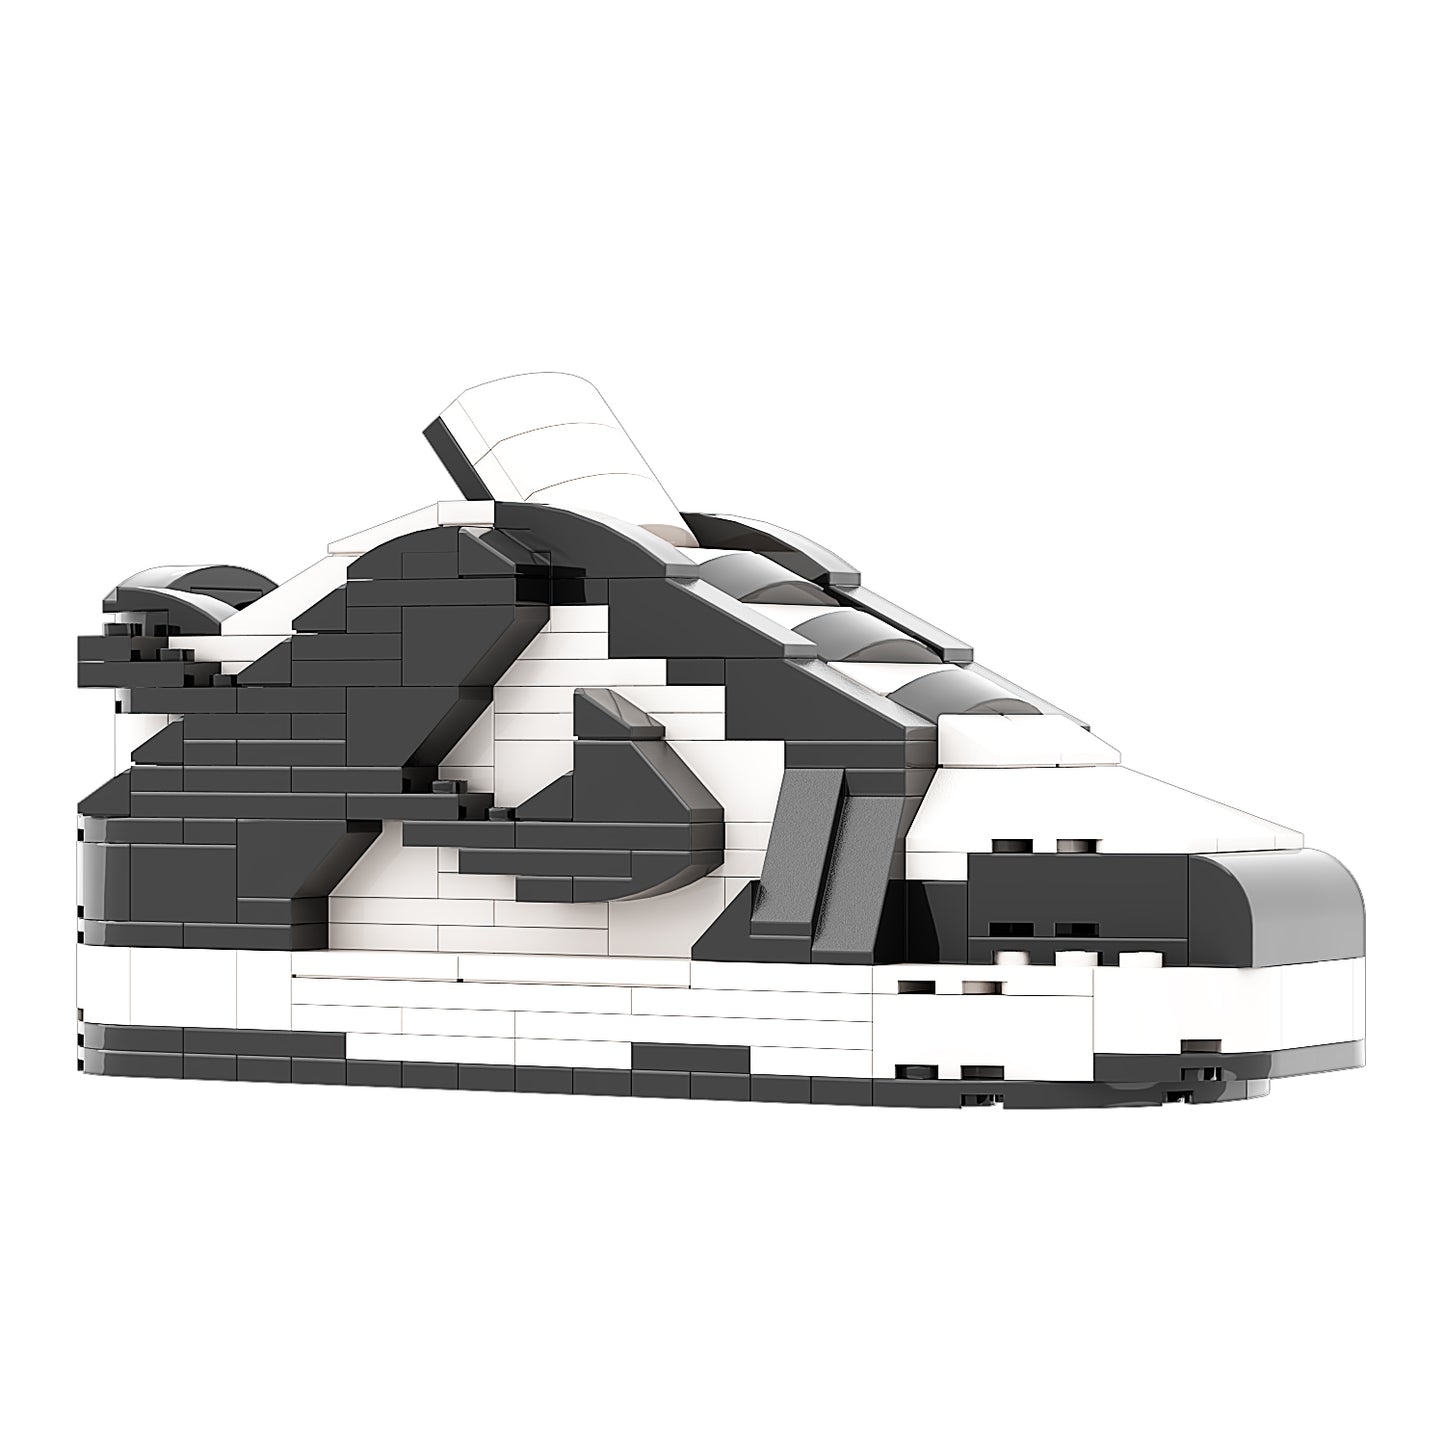 REGULAR "SB Dunk Panda" Sneaker Bricks with Mini Figure